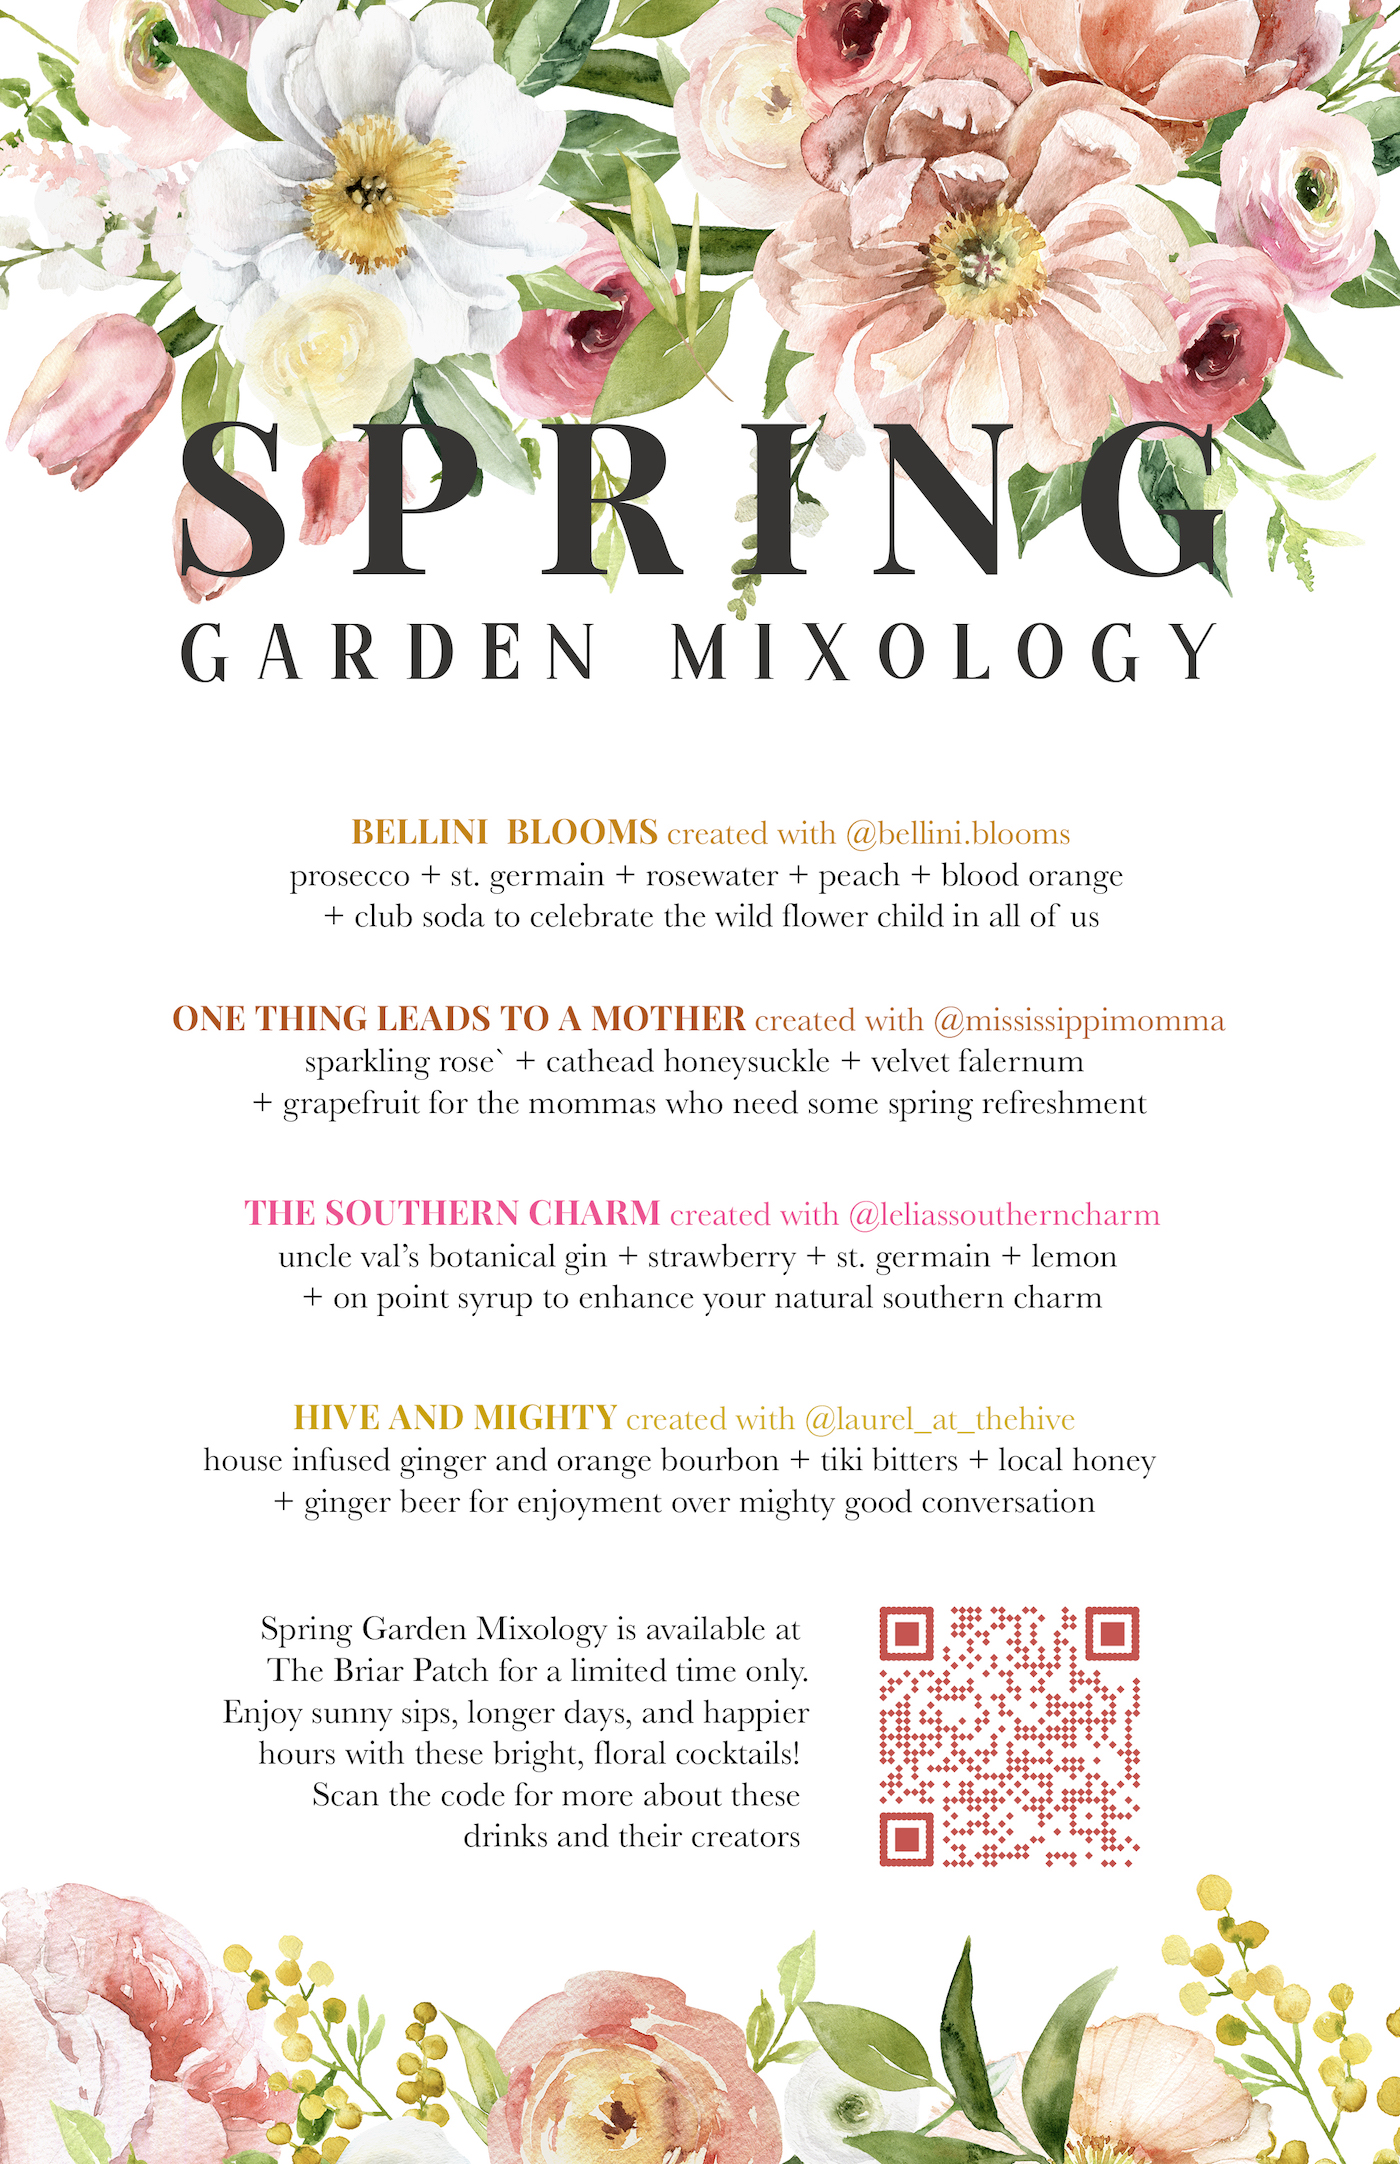 Spring Garden Mixology at The Briar Patch